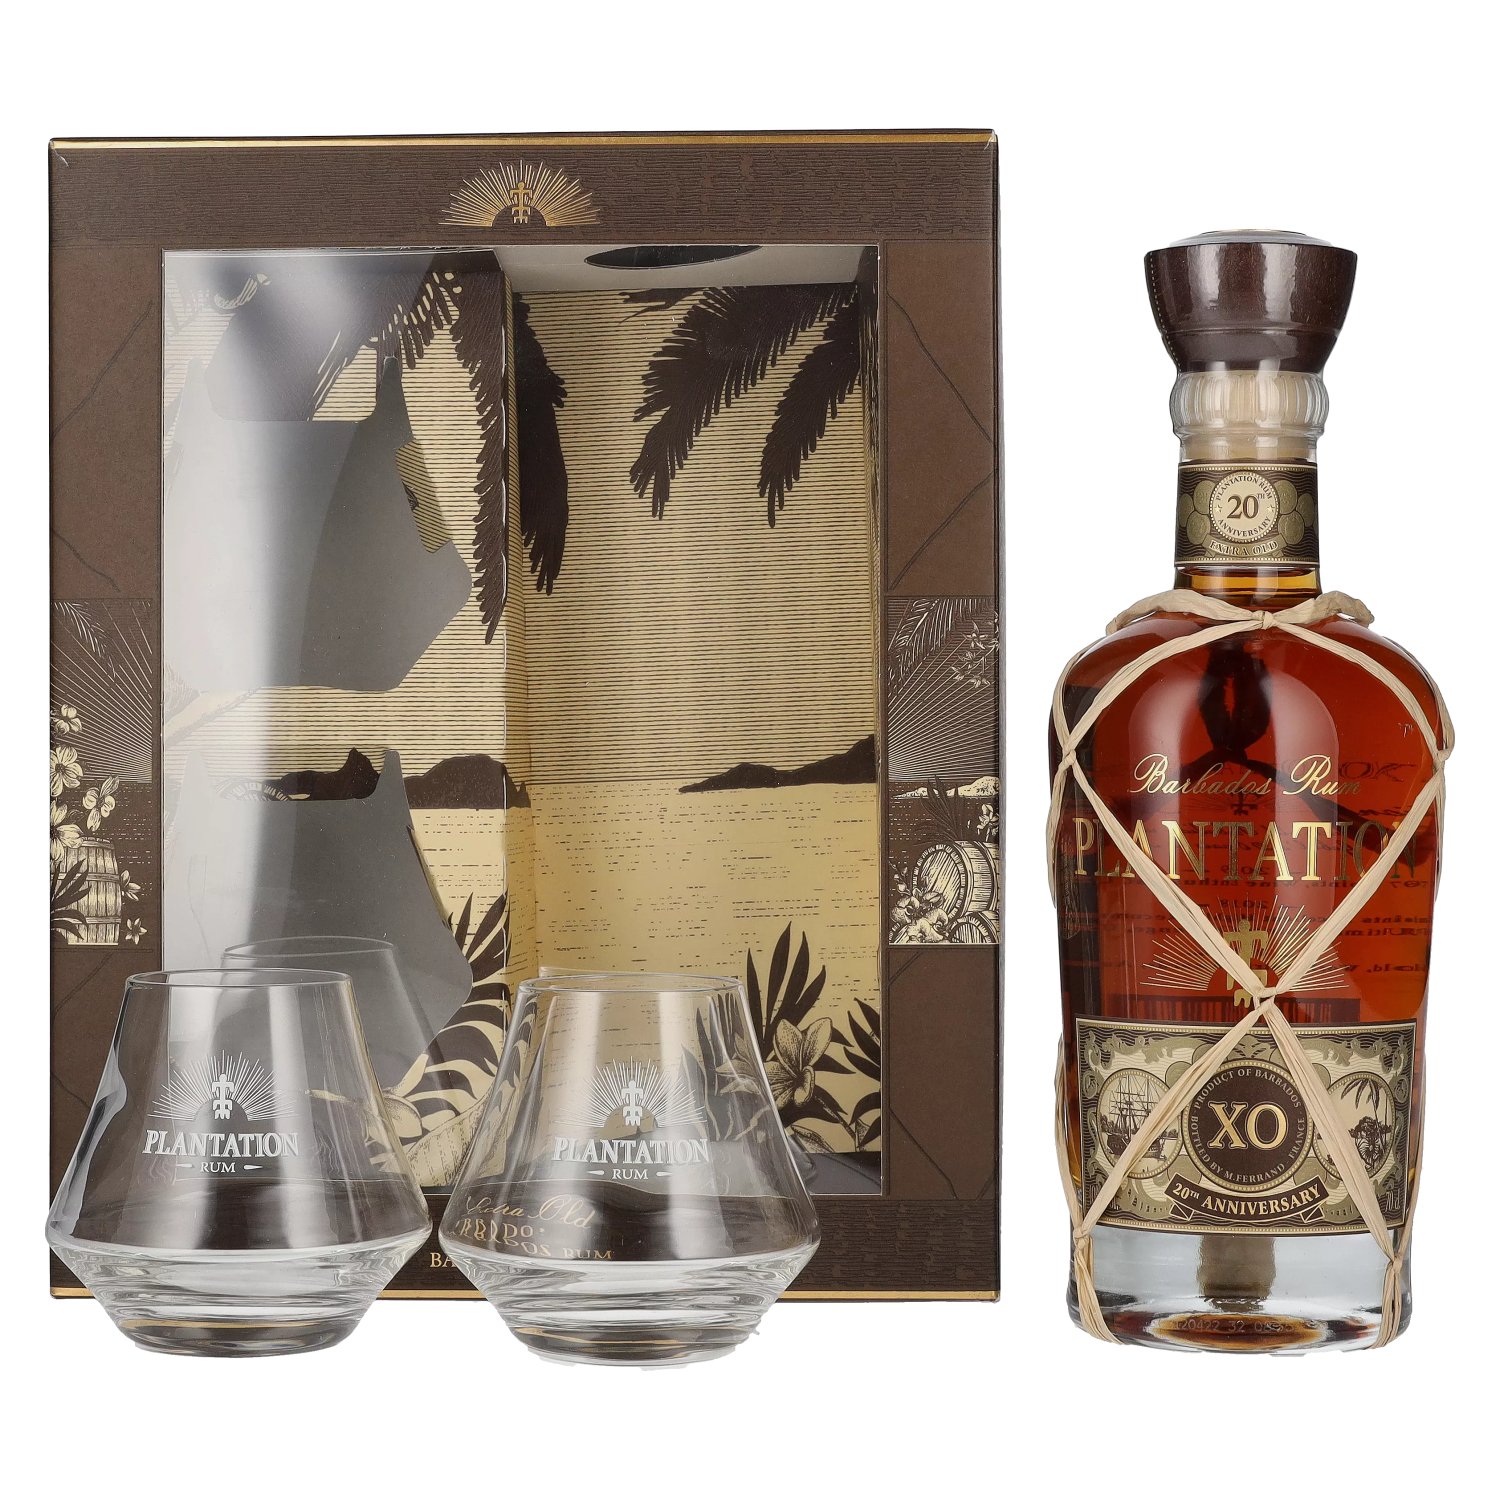 Plantation Rum 40% BARBADOS Anniversary 20th XO Vol. 0,7l Giftbox 2 with in glasses